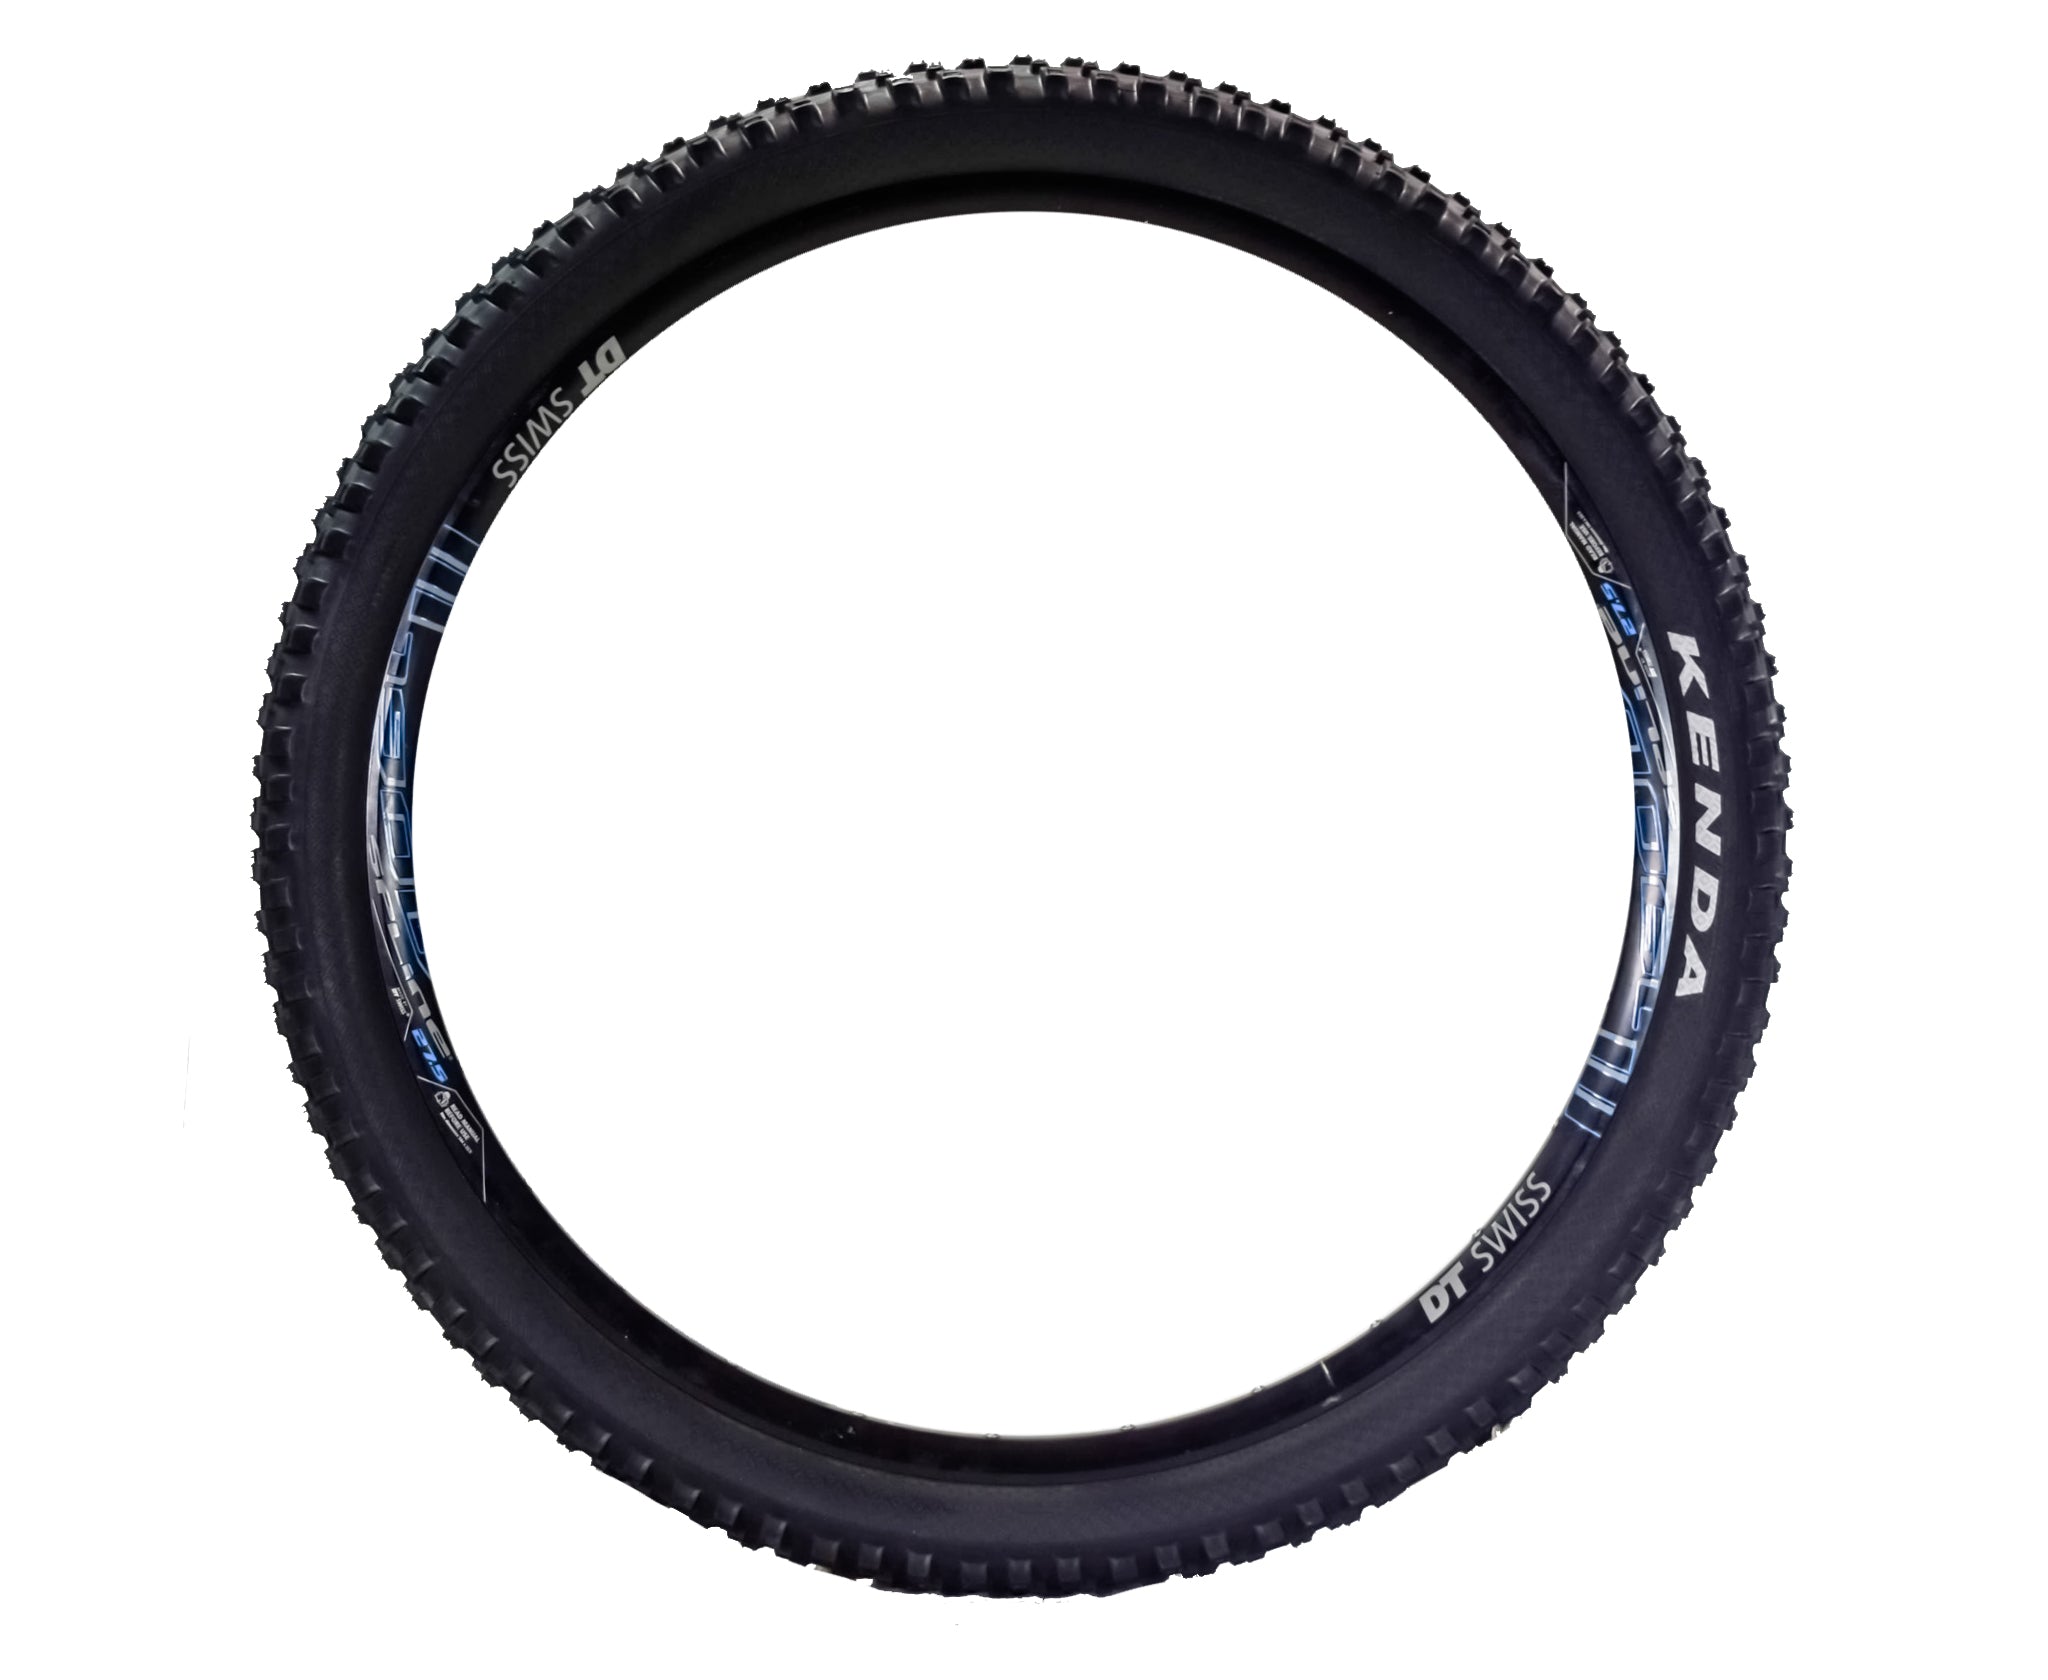 Kenda Nevegal 2 Pro ATC 120tpi Fold 27.5x2.40 Trail Bicycle Tire with Tube